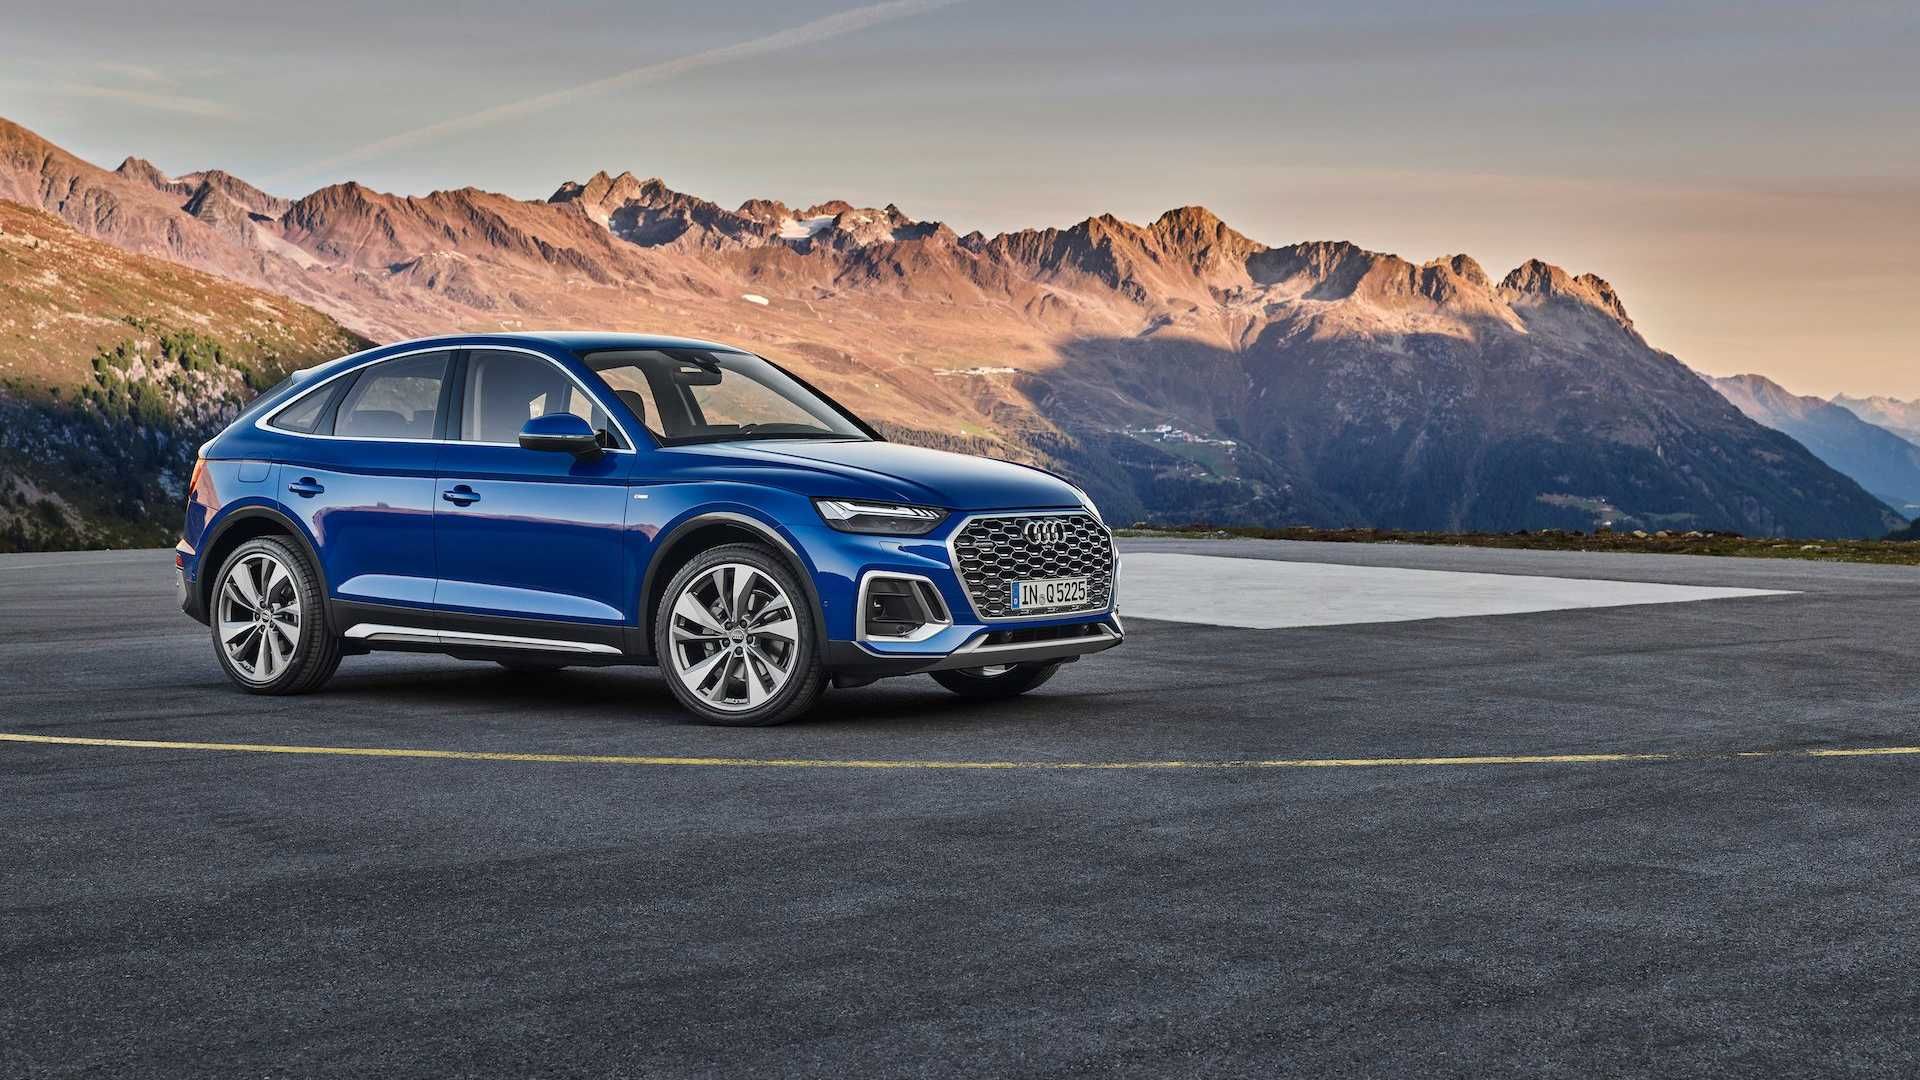 مرجع متخصصين ايران نماي جانبي كراس اور آئودي كيو 5 اسپرت بك / 2021 Audi Q5 Sportback آبي رنگ در كنار مانديشه متخصصينه كوه و آسمان